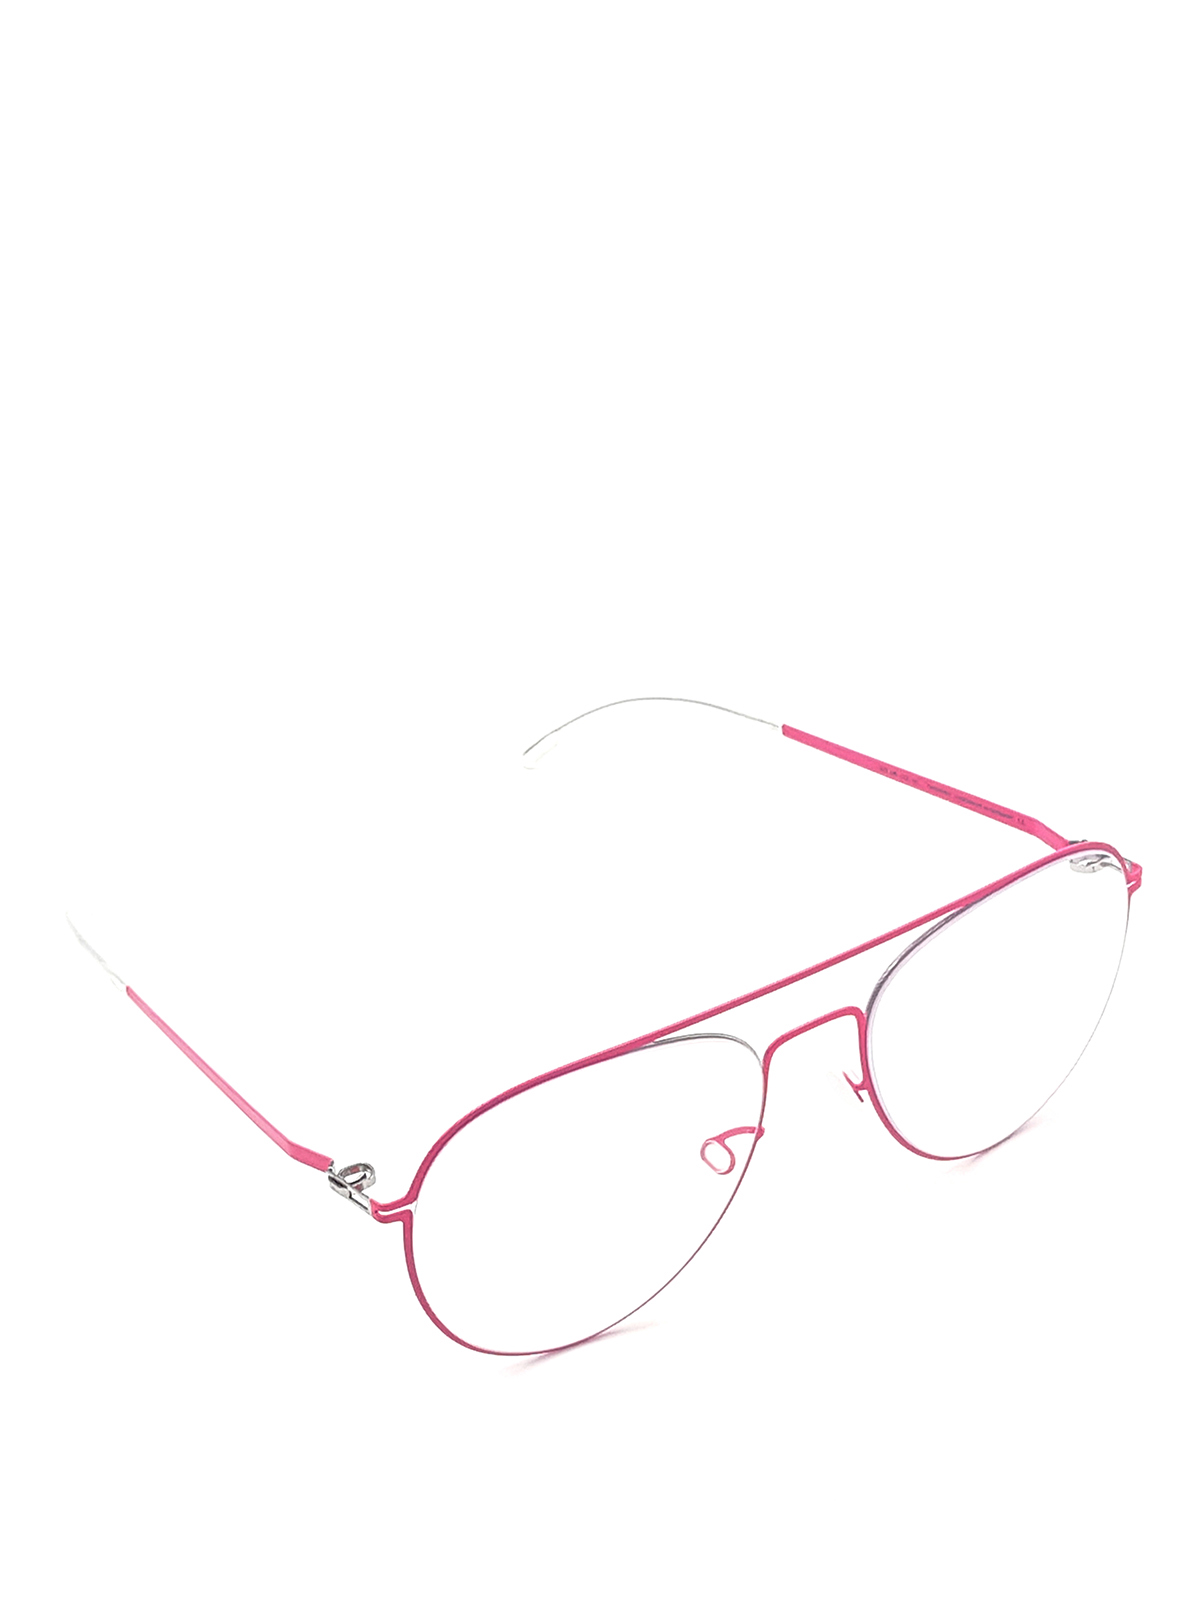 Glasses Eero fluo pink eyeglasses 151SILVERNEONPINK